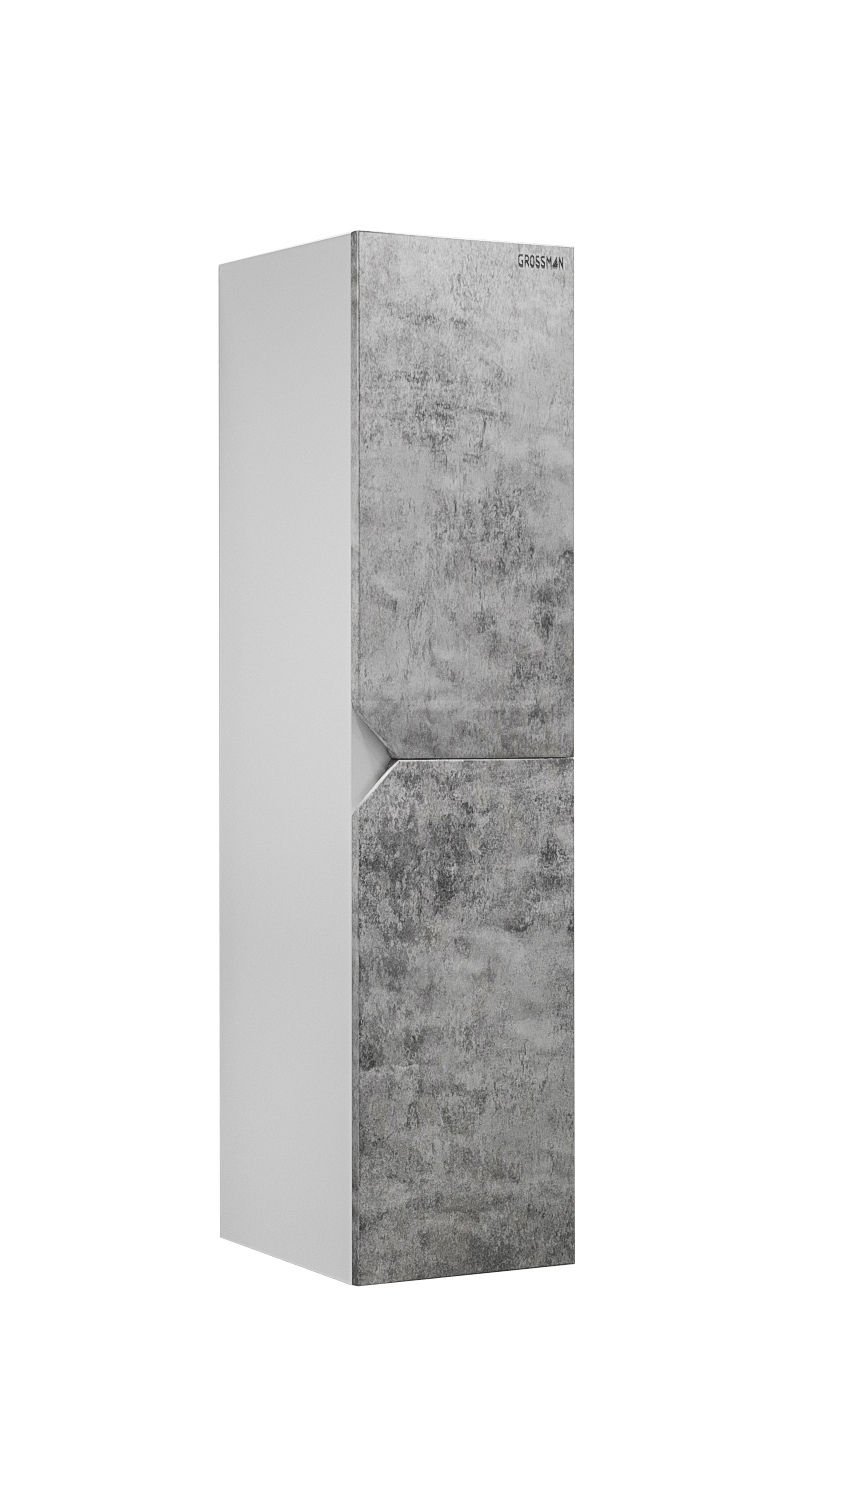 пенал grossman талис 35х150 бетон пайн серый 303507 Пенал Grossman Инлайн 303505 универсальный, белый, бетон